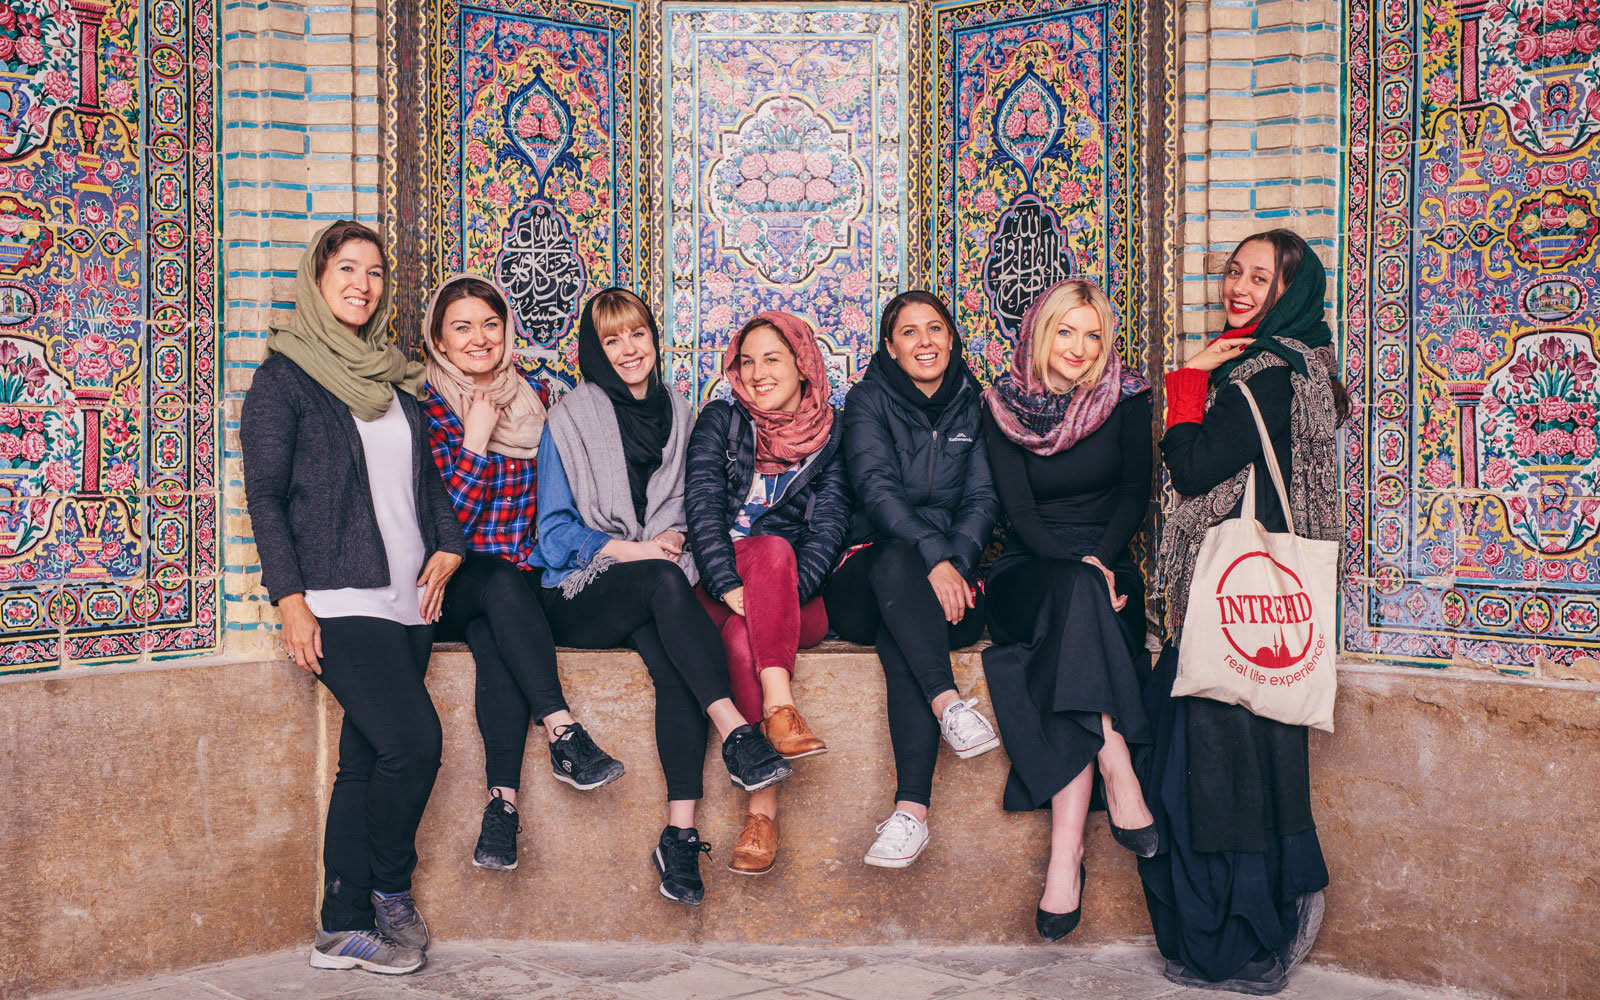 Traveling in Iran as a woman: meet the Islamic dress code